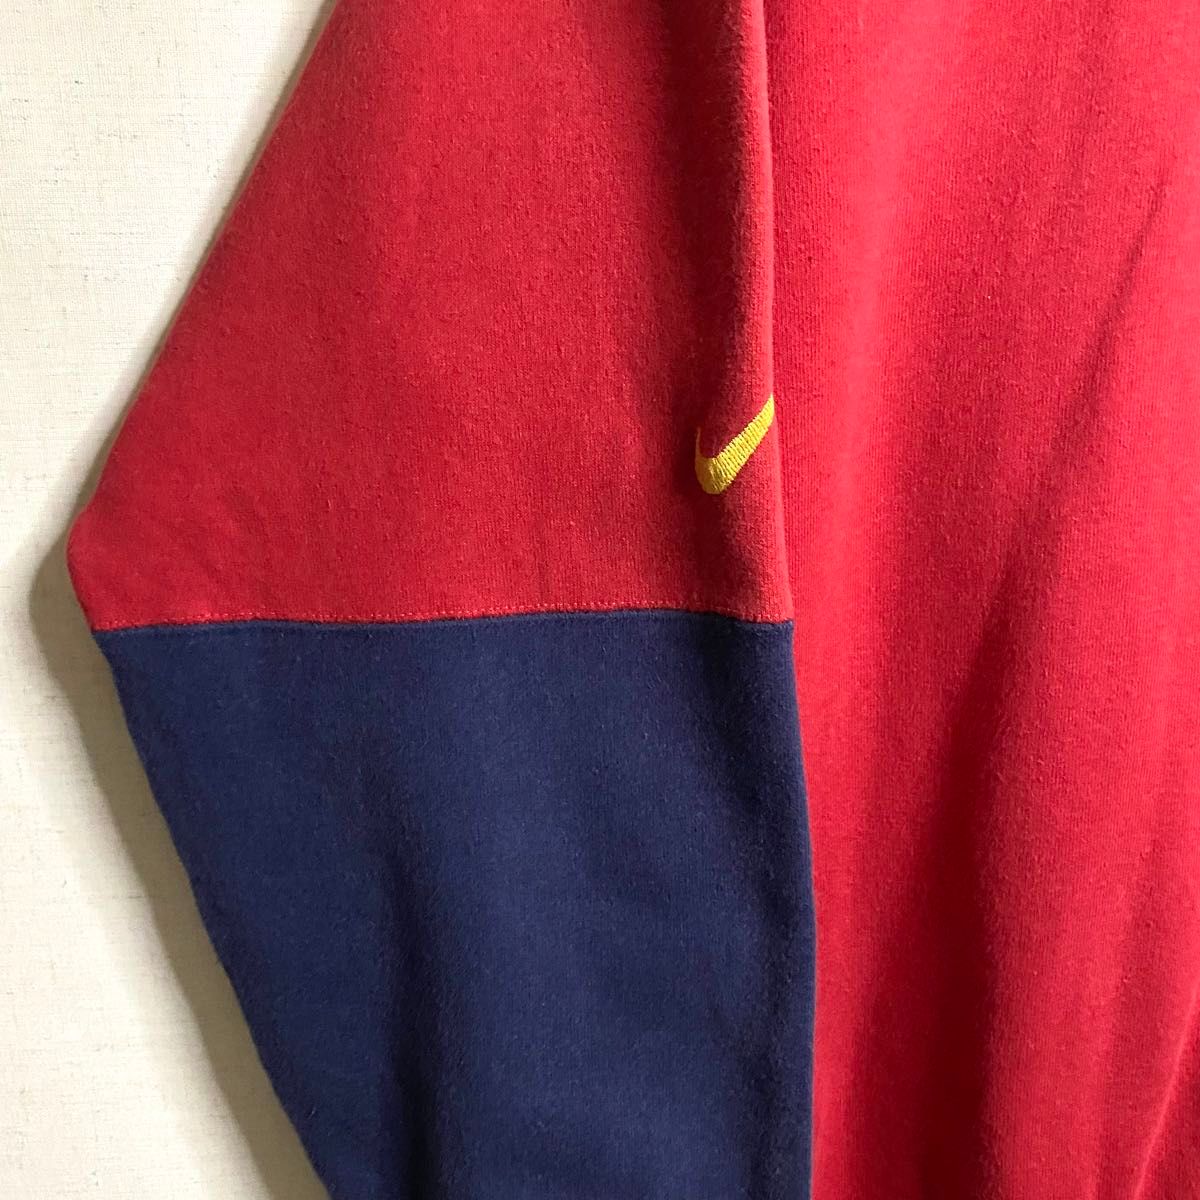 【NIKE】90年代 背面 ボックスロゴ バイカラー 刺繍ロゴ スウェット 赤青